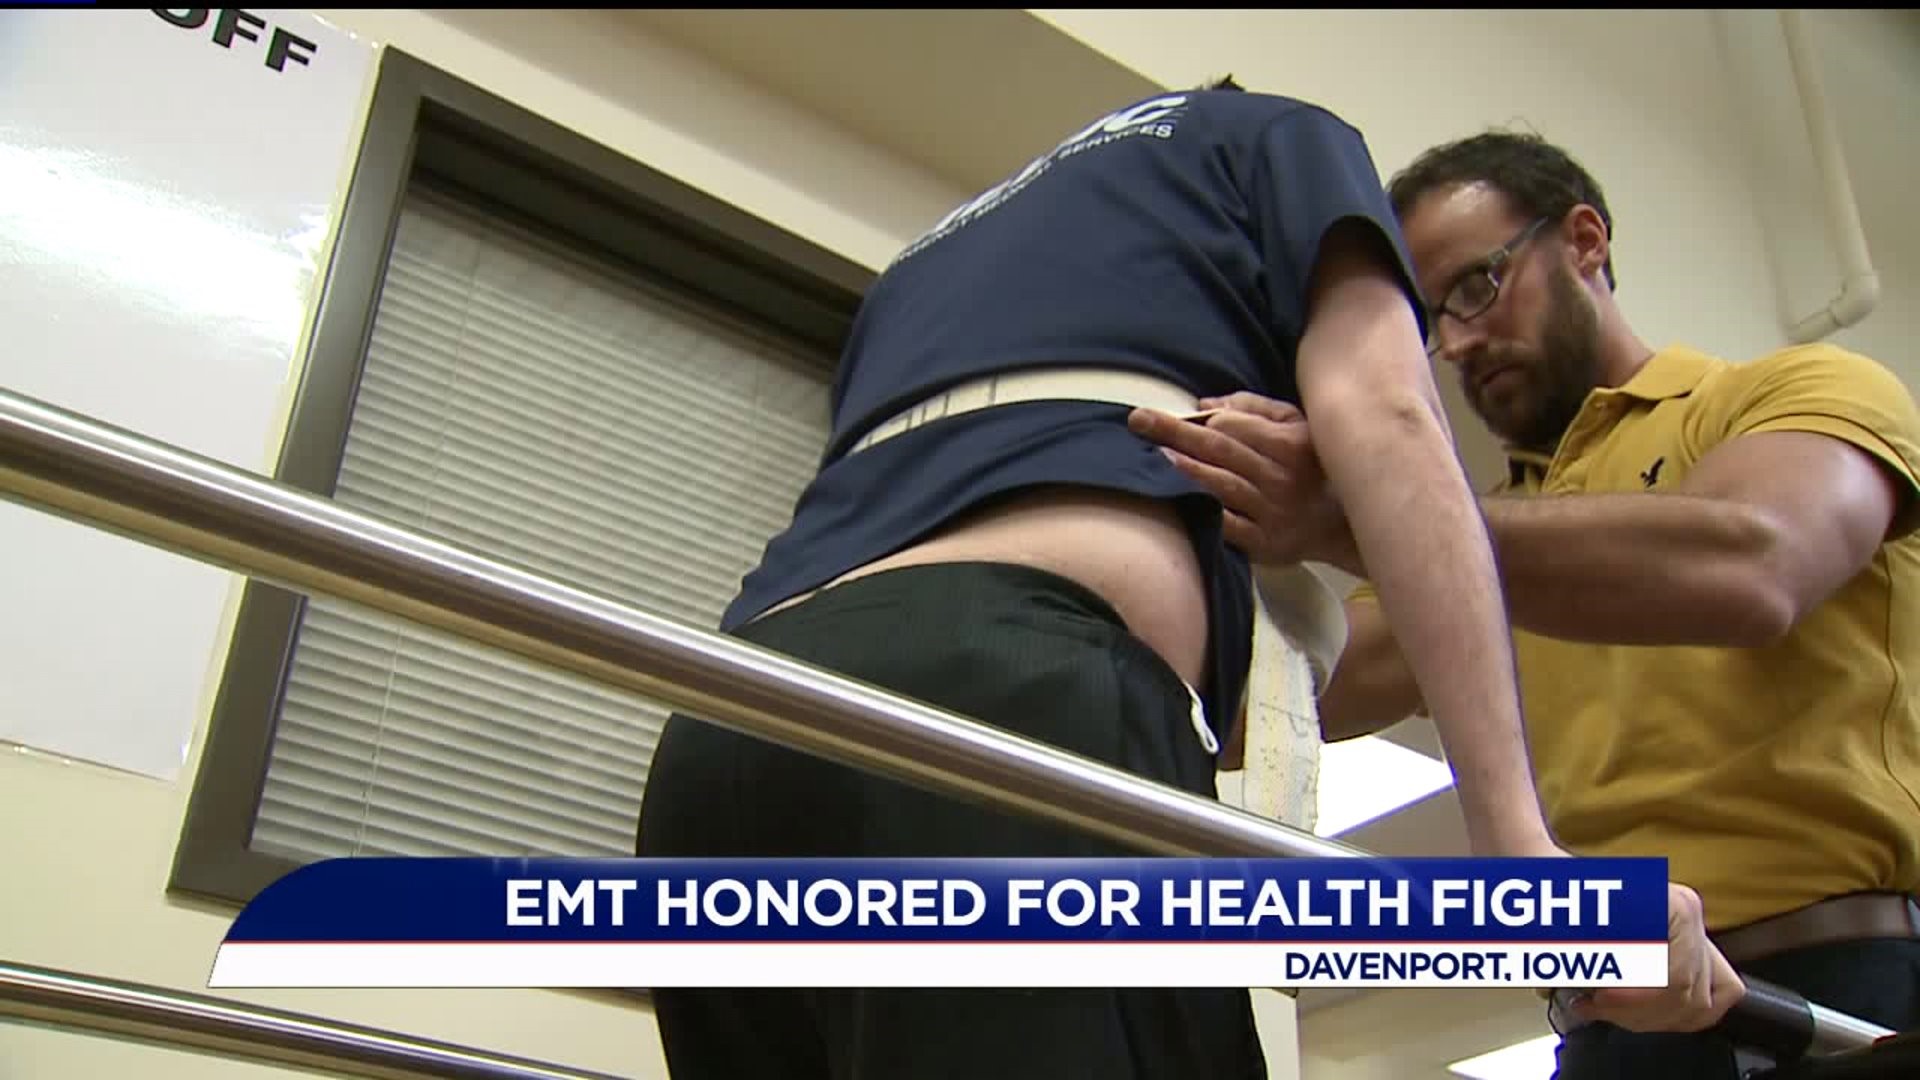 Davenport EMT honored for health fight